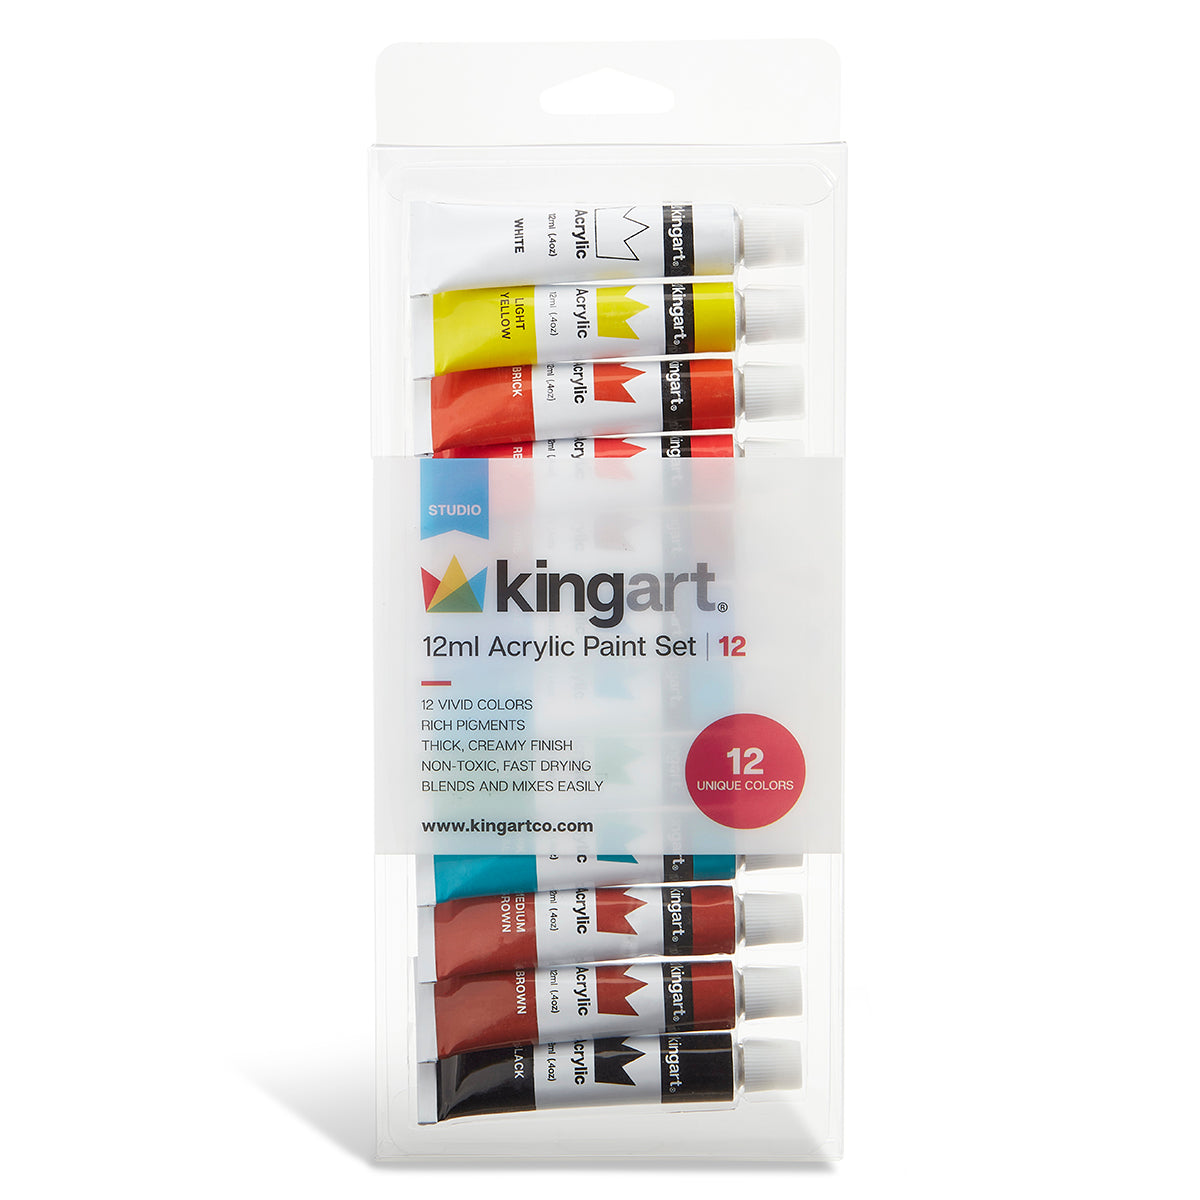 KINGART® Acrylic Craft Paint, 60ml (2oz) Bottle, Set of 6 Fluorescent  Colors